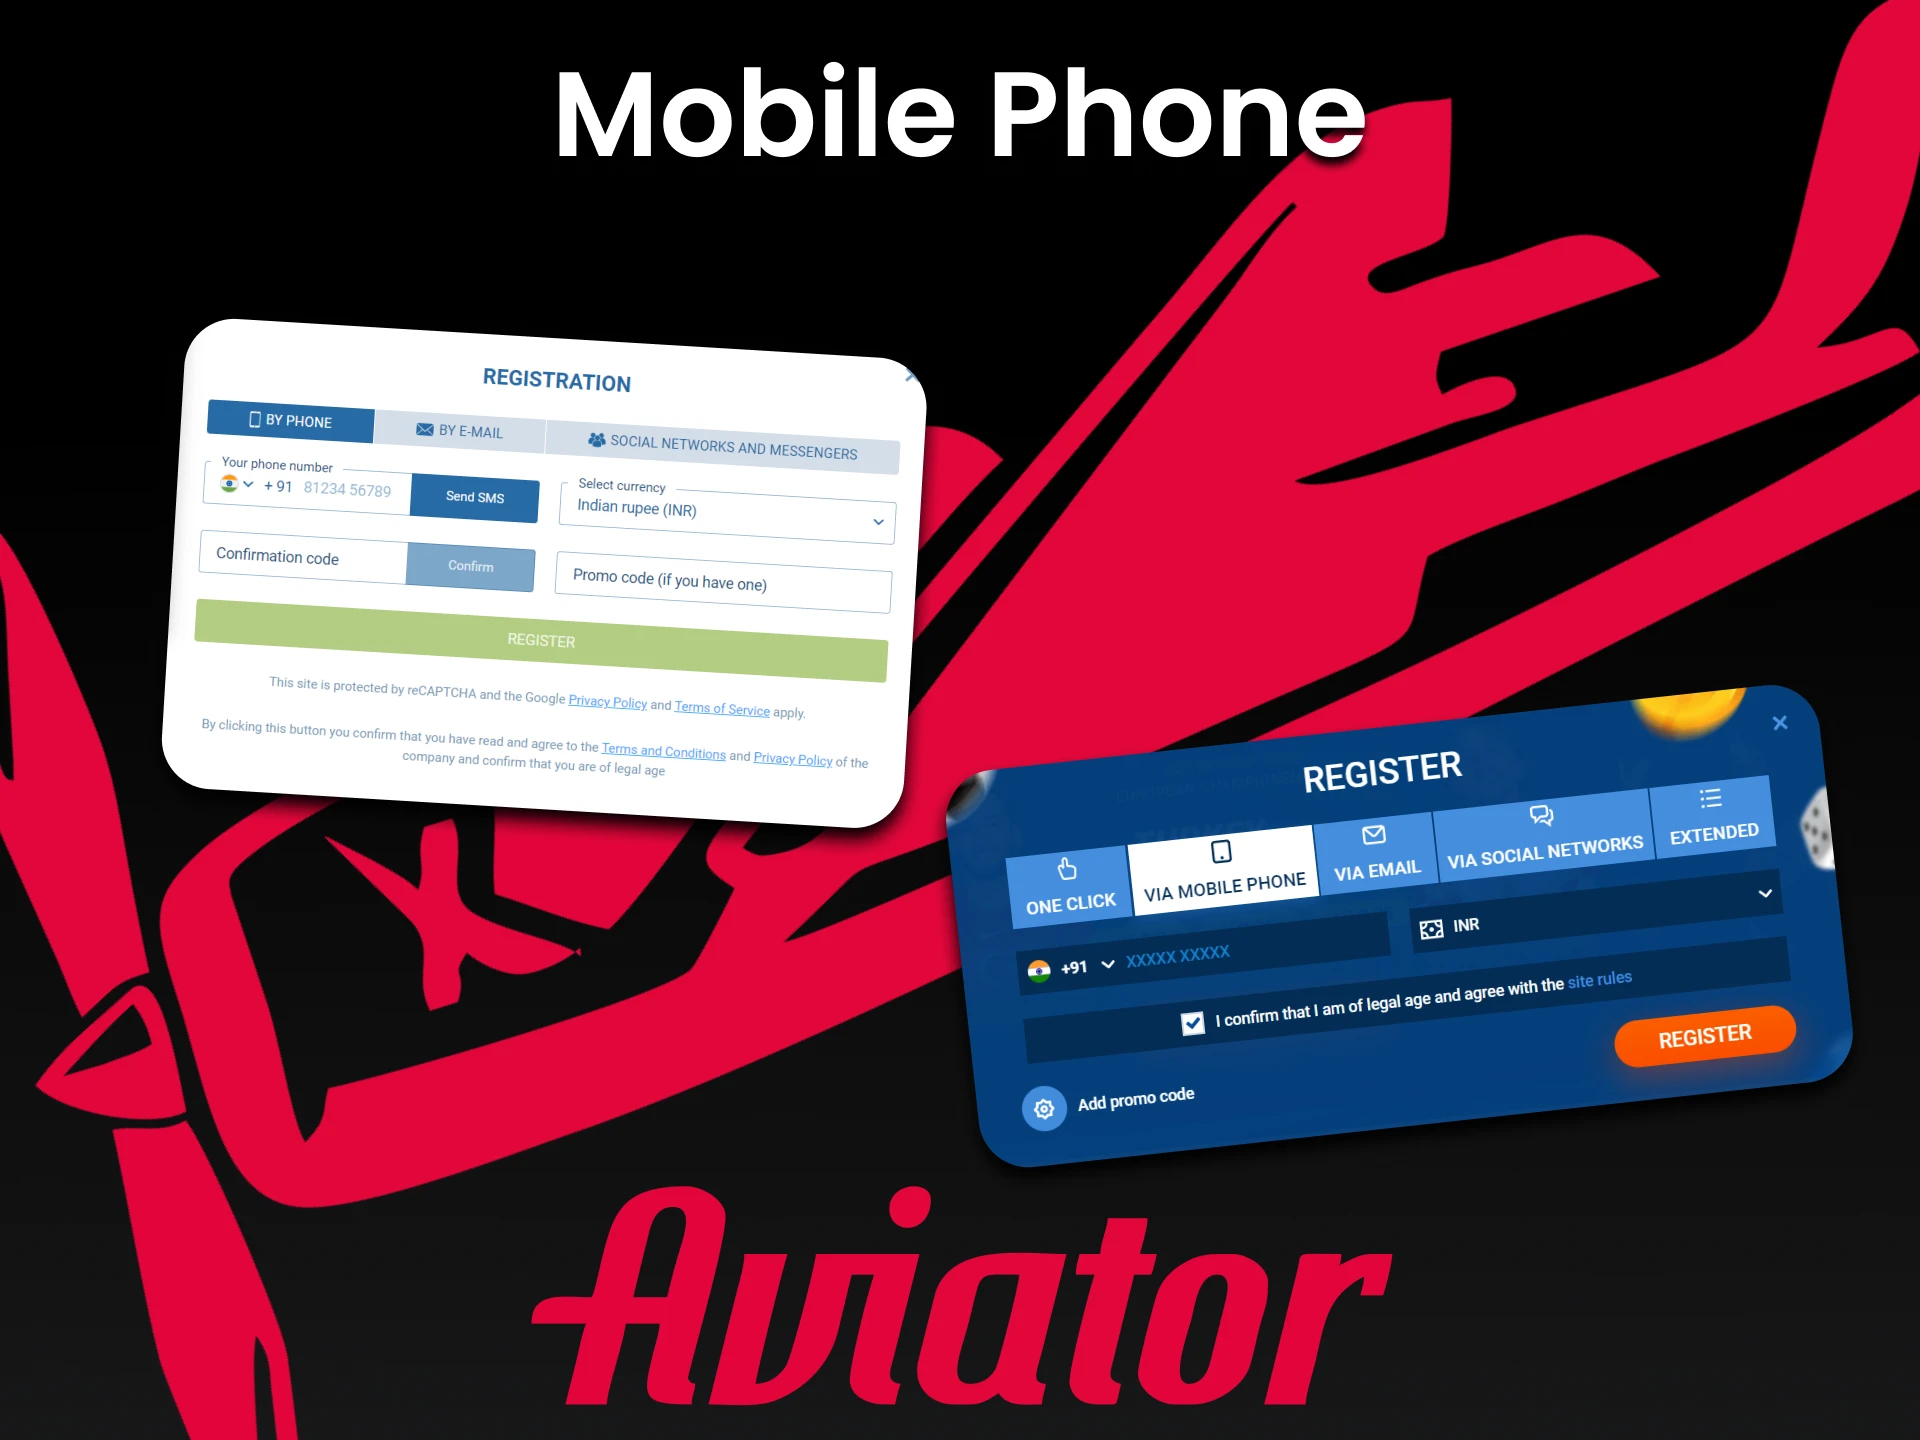 You can create an account via phone to play Aviator.